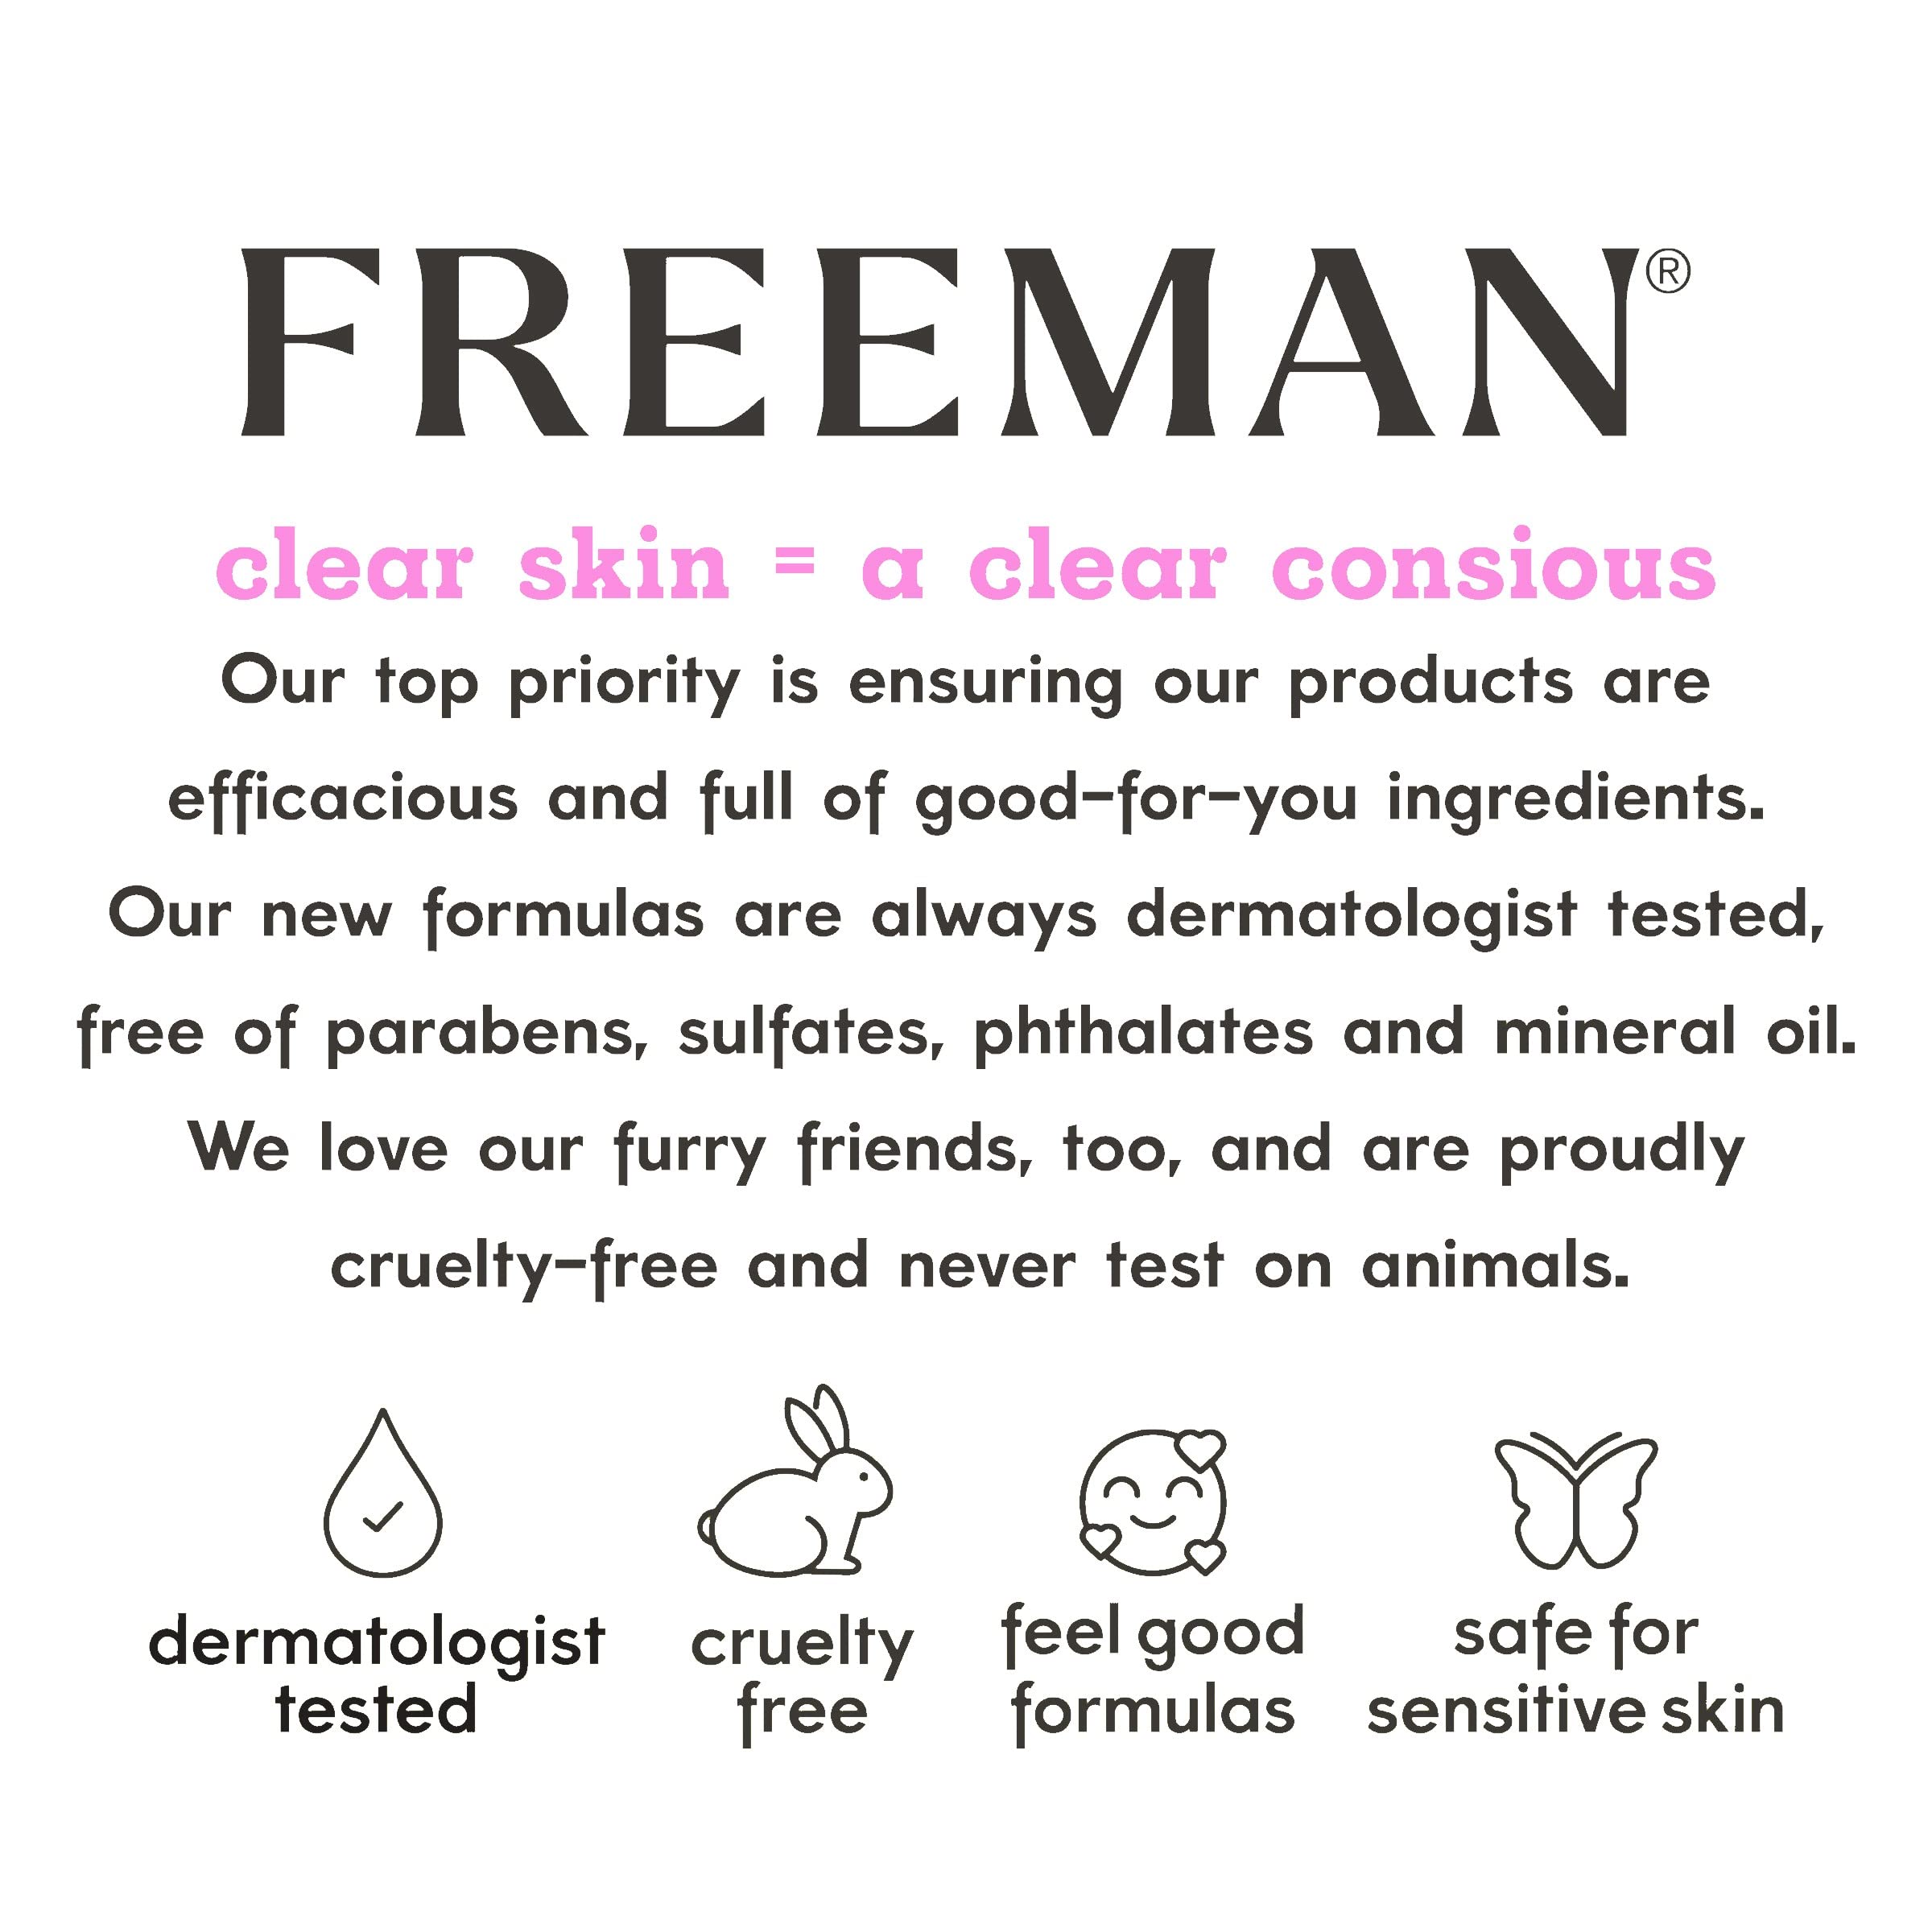 FREEMAN Limited Edition Glacier Water Pink Peony Cream Gel Facial Mask & Charcoal Black Sugar Mud Facial Mask, Hydrating & Detoxifying Skincare Masks, Gift Set, 2 Count, 1.5 fl.oz./44 mL Tubes